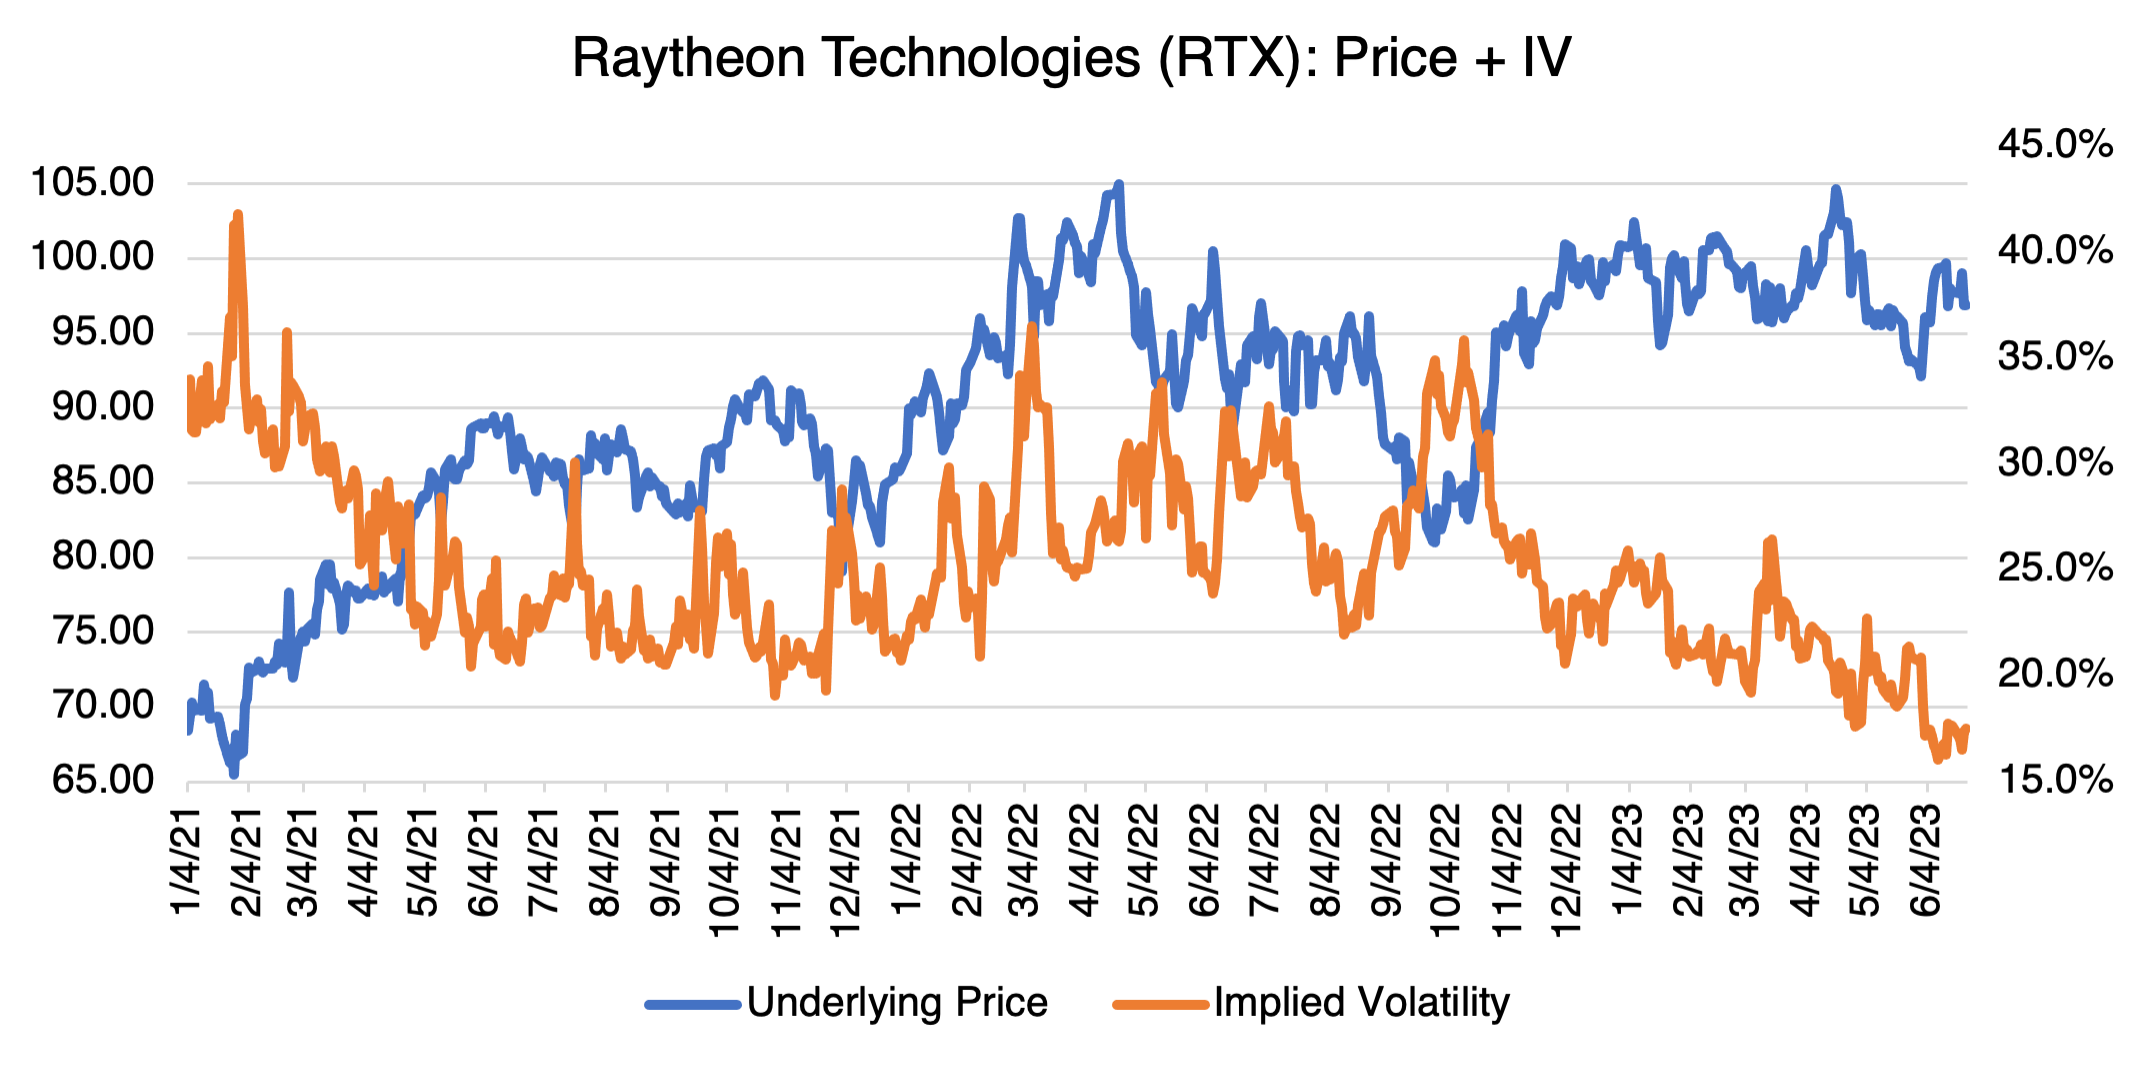 Raytheon Technologies: Price + IV